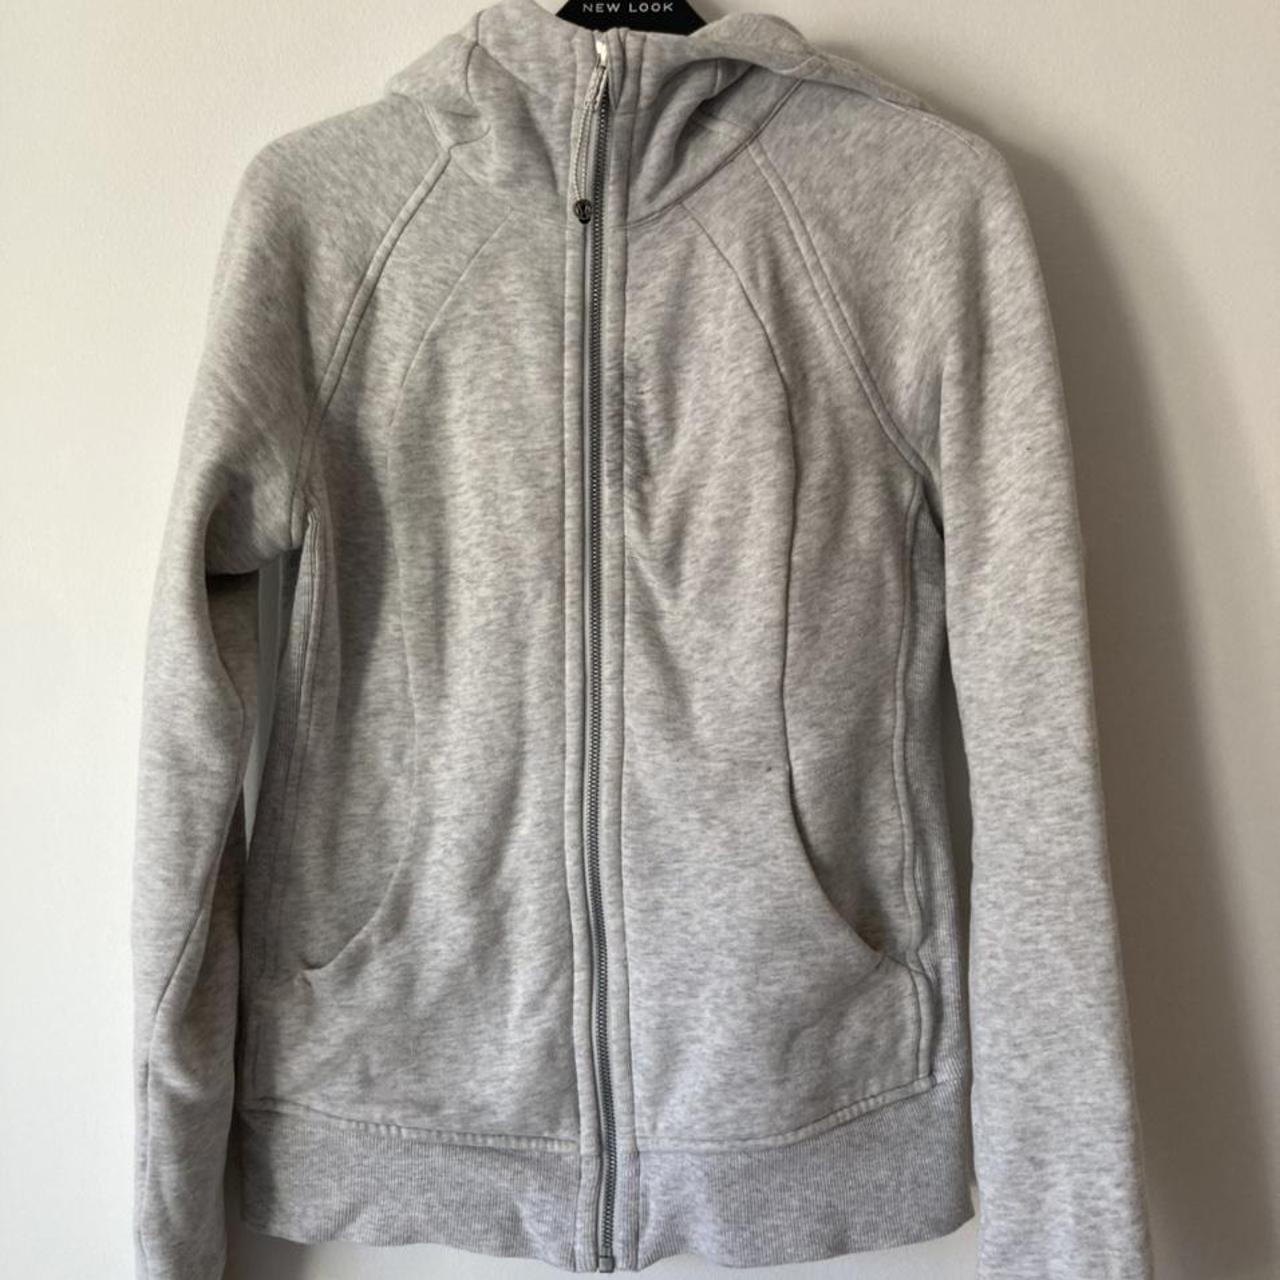 Product Image 1 - Lululemon scuba hoodie in grey.